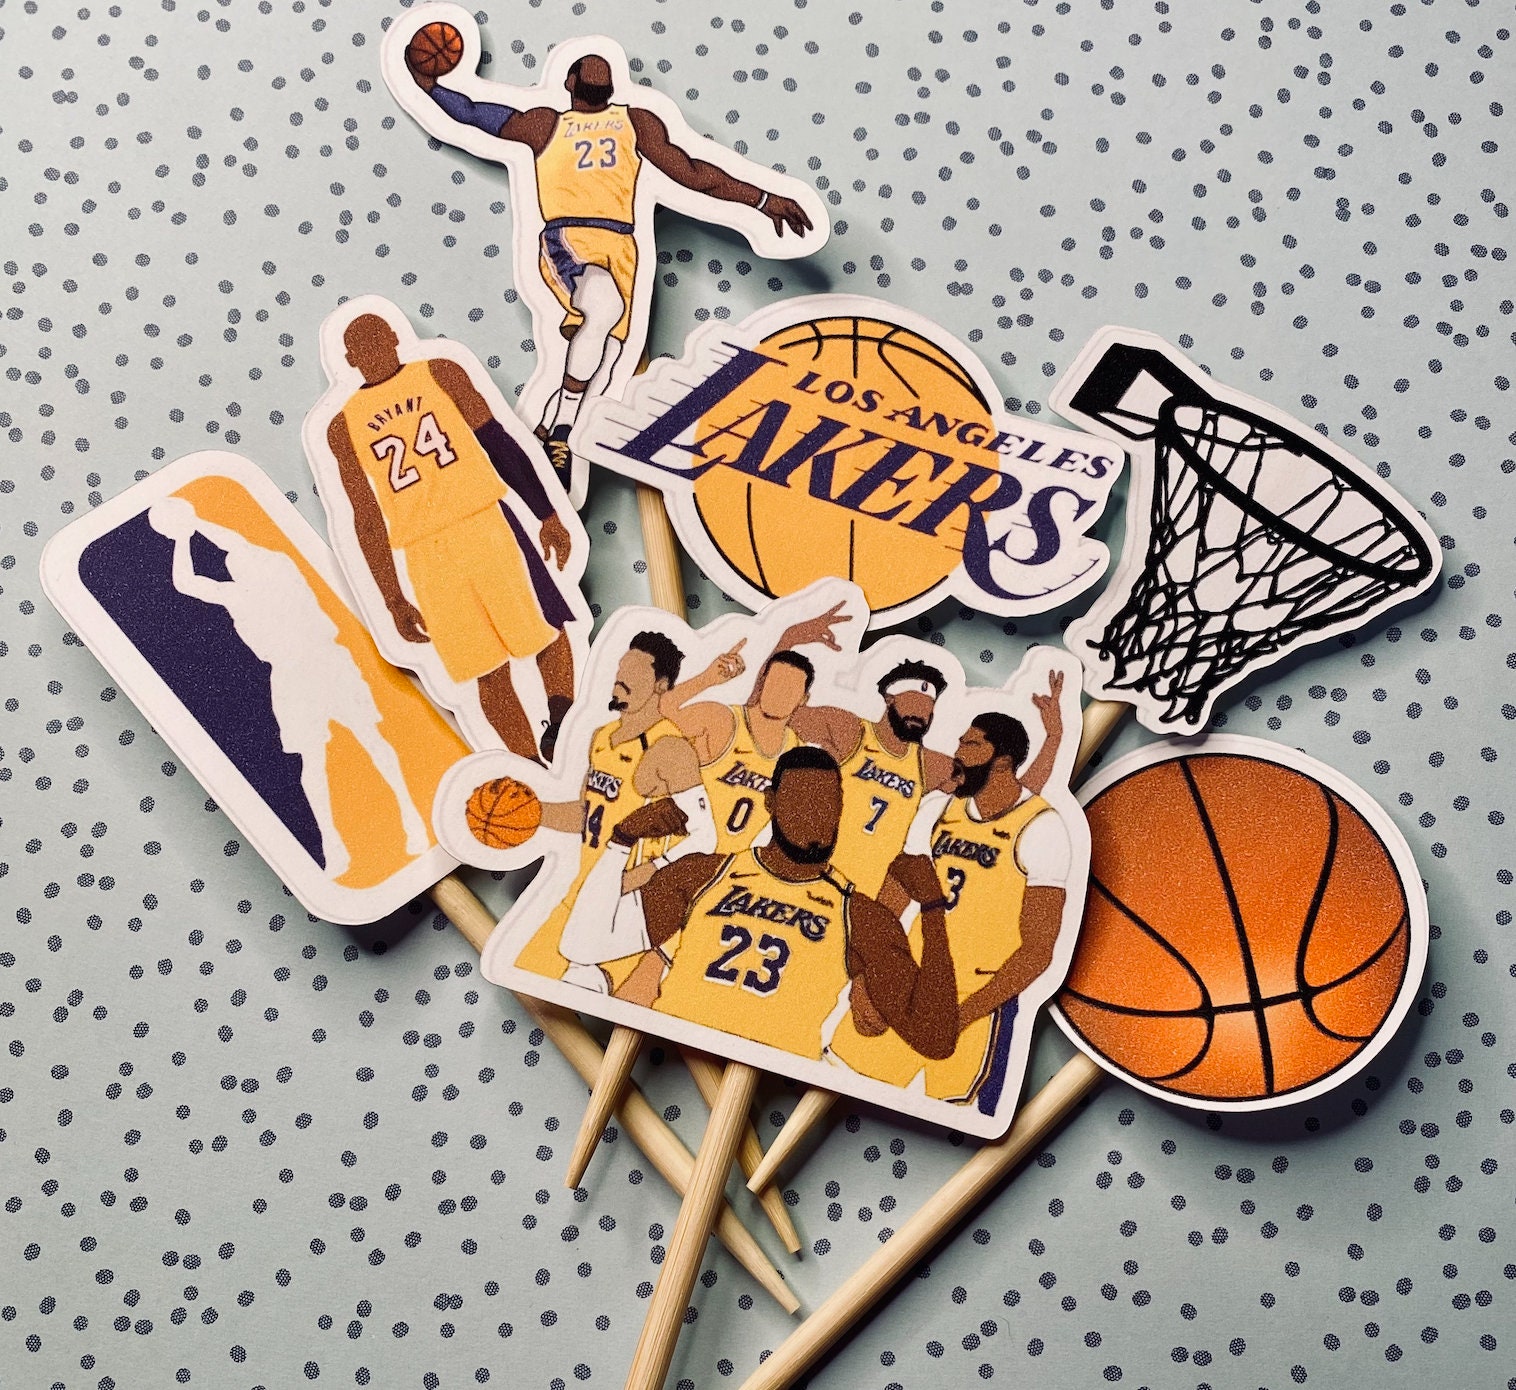 LA Lakers Theme 1st - Jericho Balloon Art & Decorations